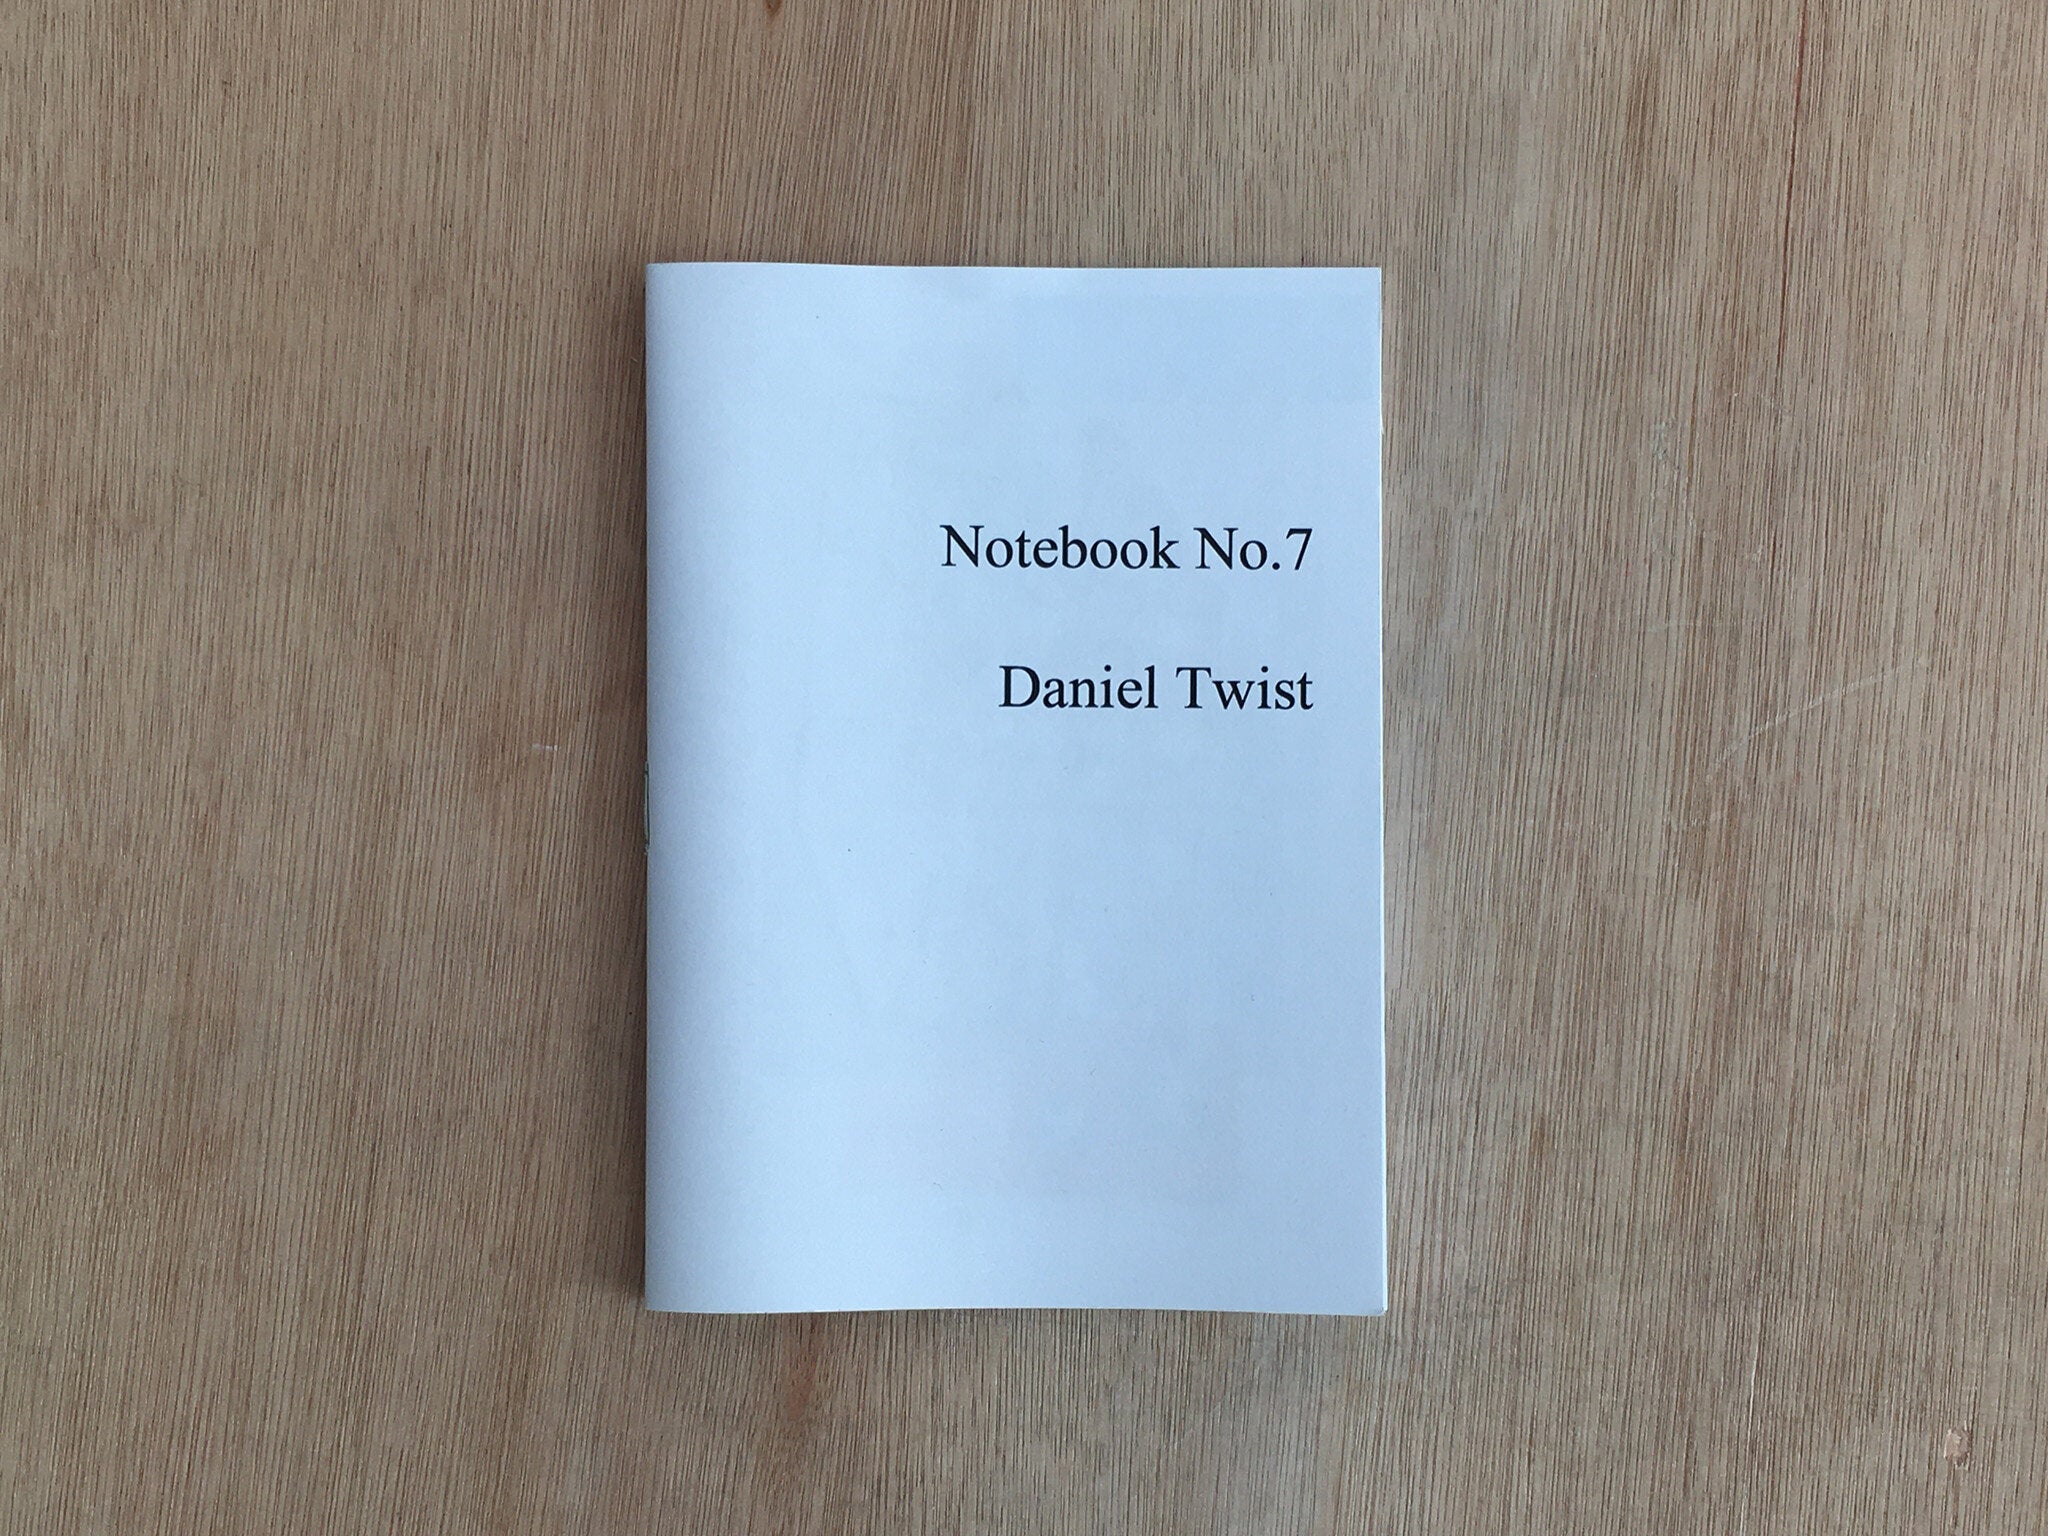 NOTEBOOK NO. 7 by Daniel Twist